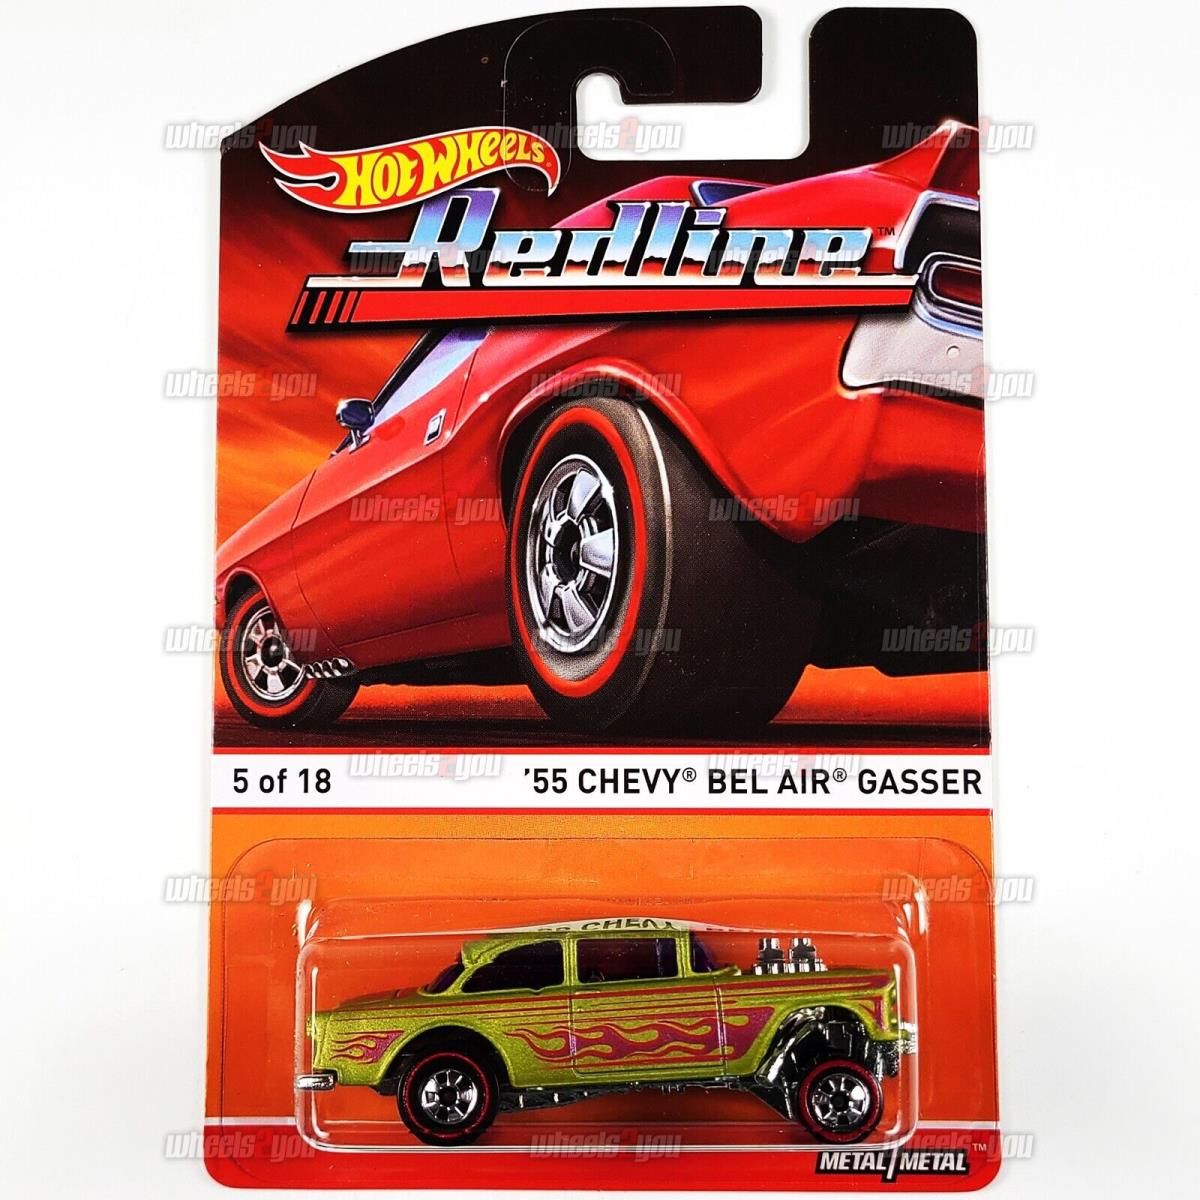 55 Chevy Bel Air Gasser 5 Gold - 2015 Hot Wheels Heritage Redline 1:64 HW - Gold